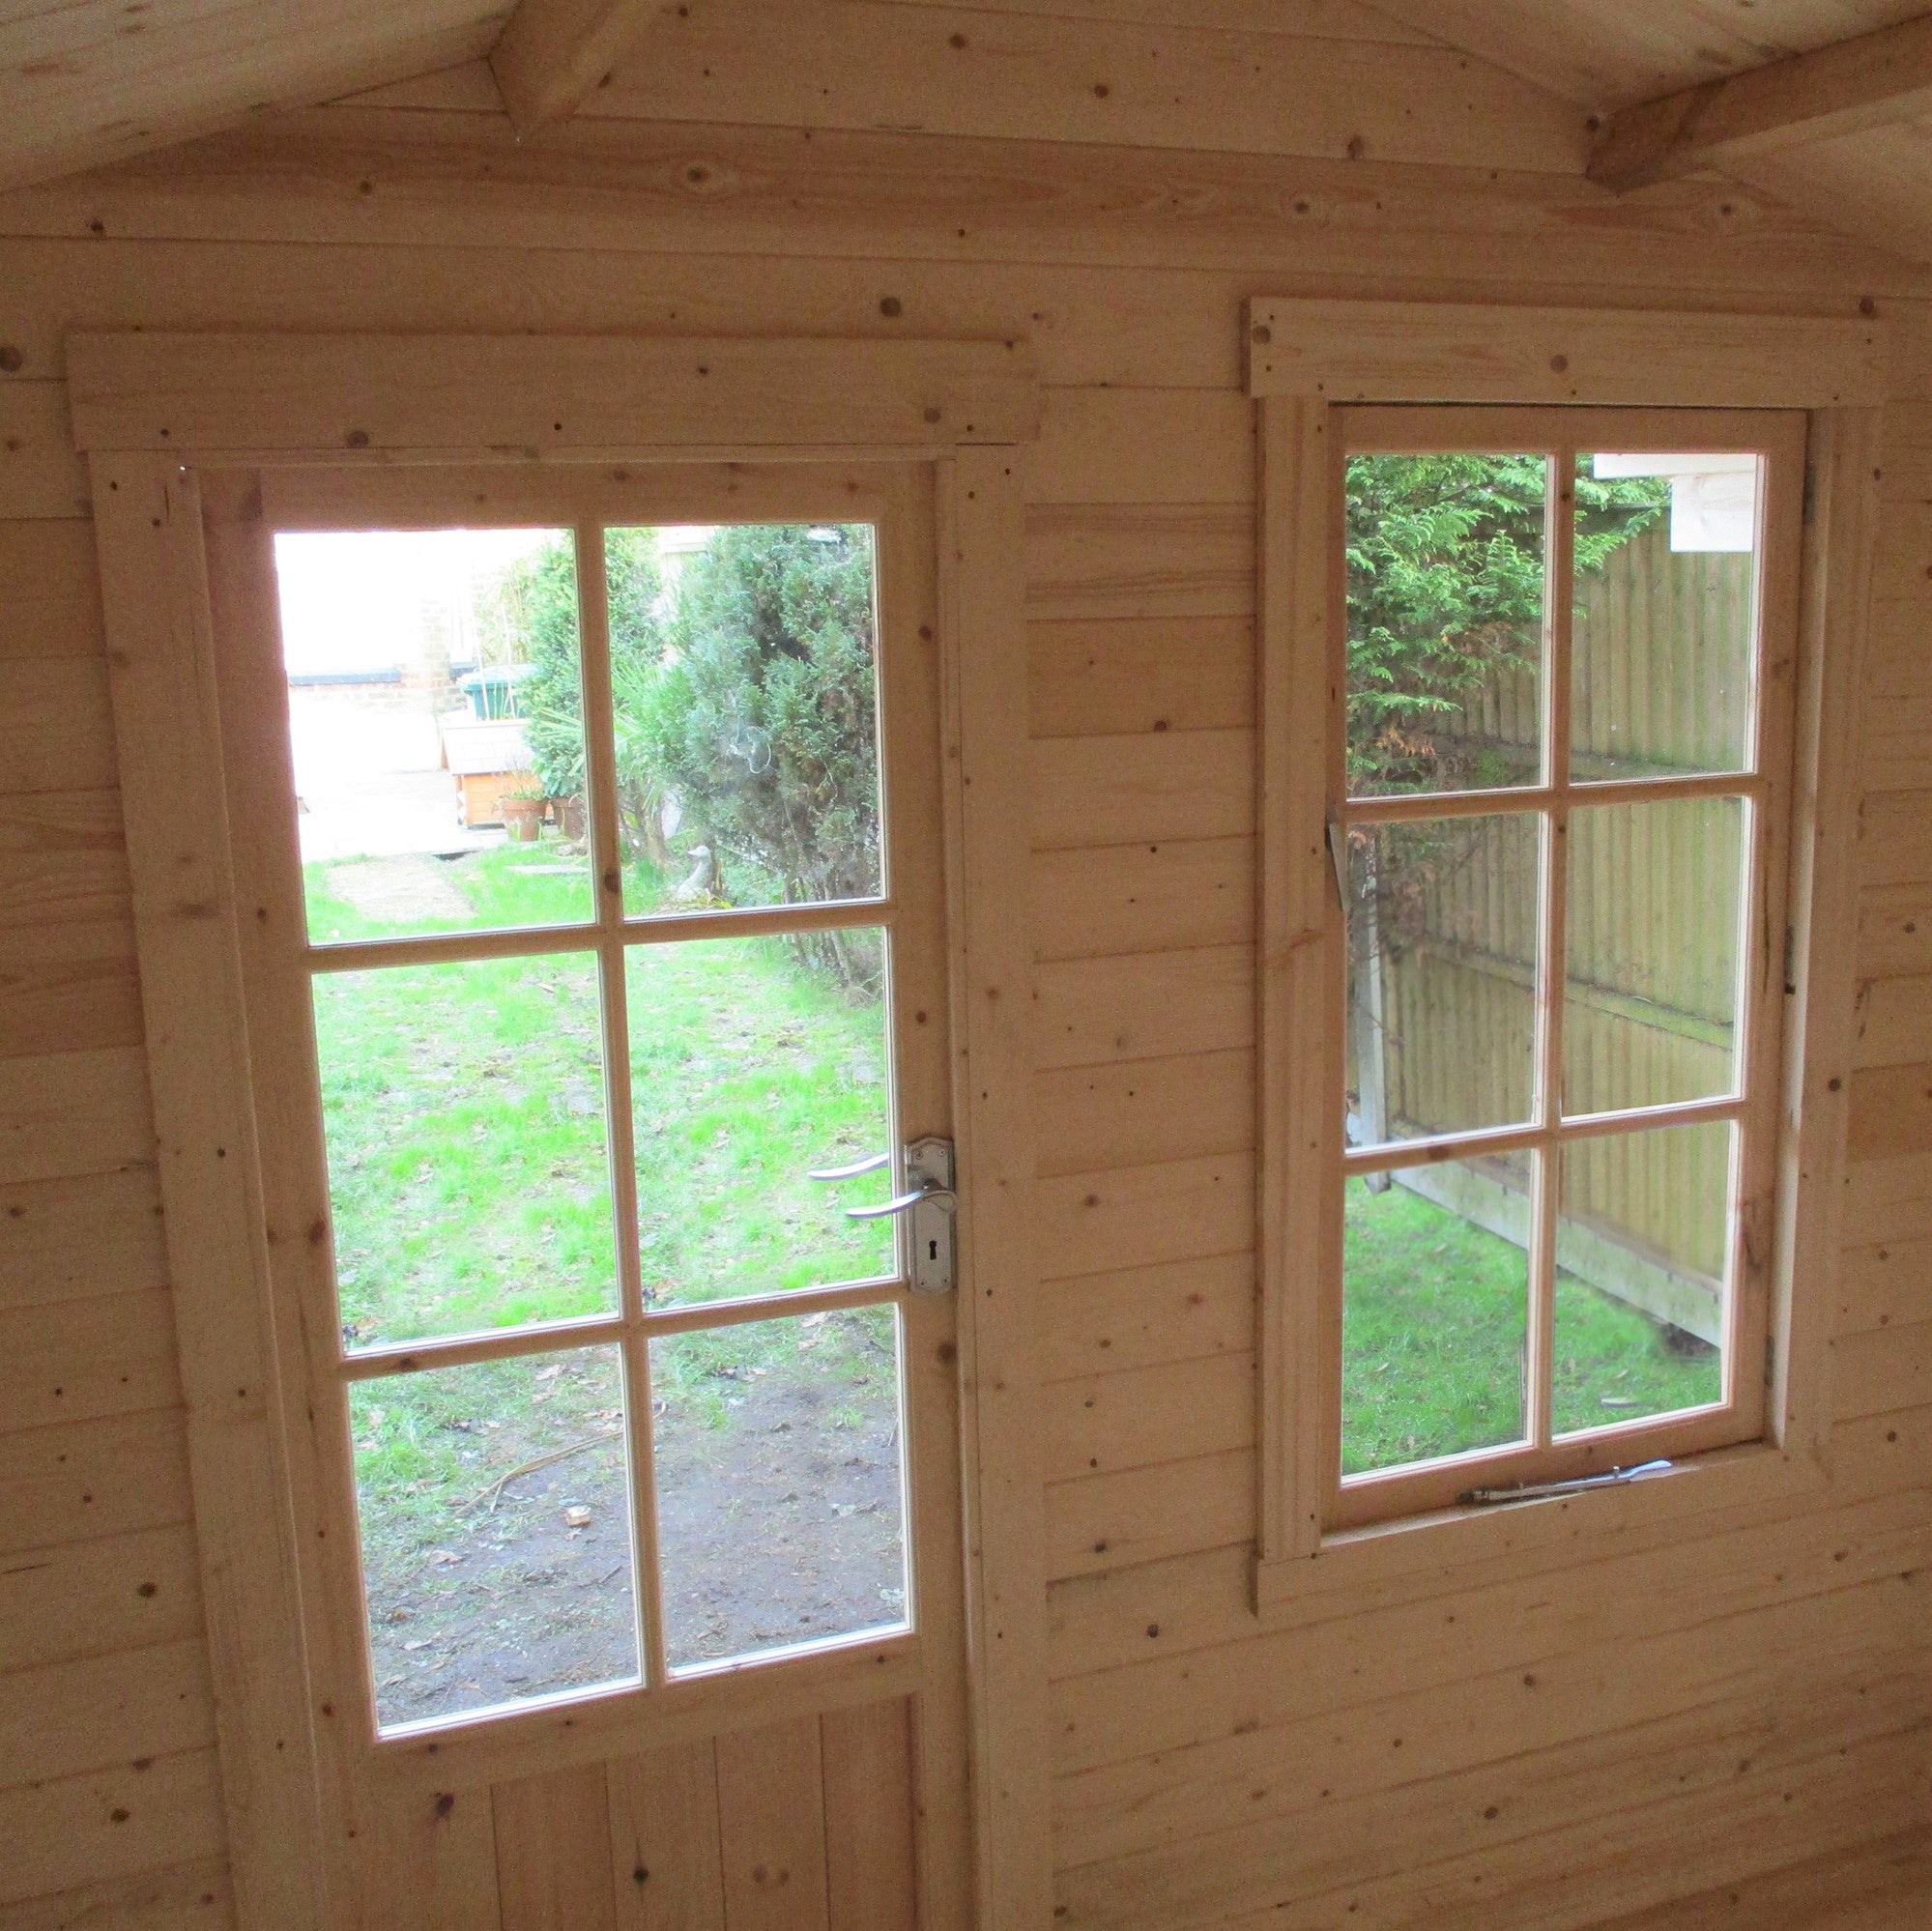 Shire Maulden With Verandah 19mm Log Cabin 8x8